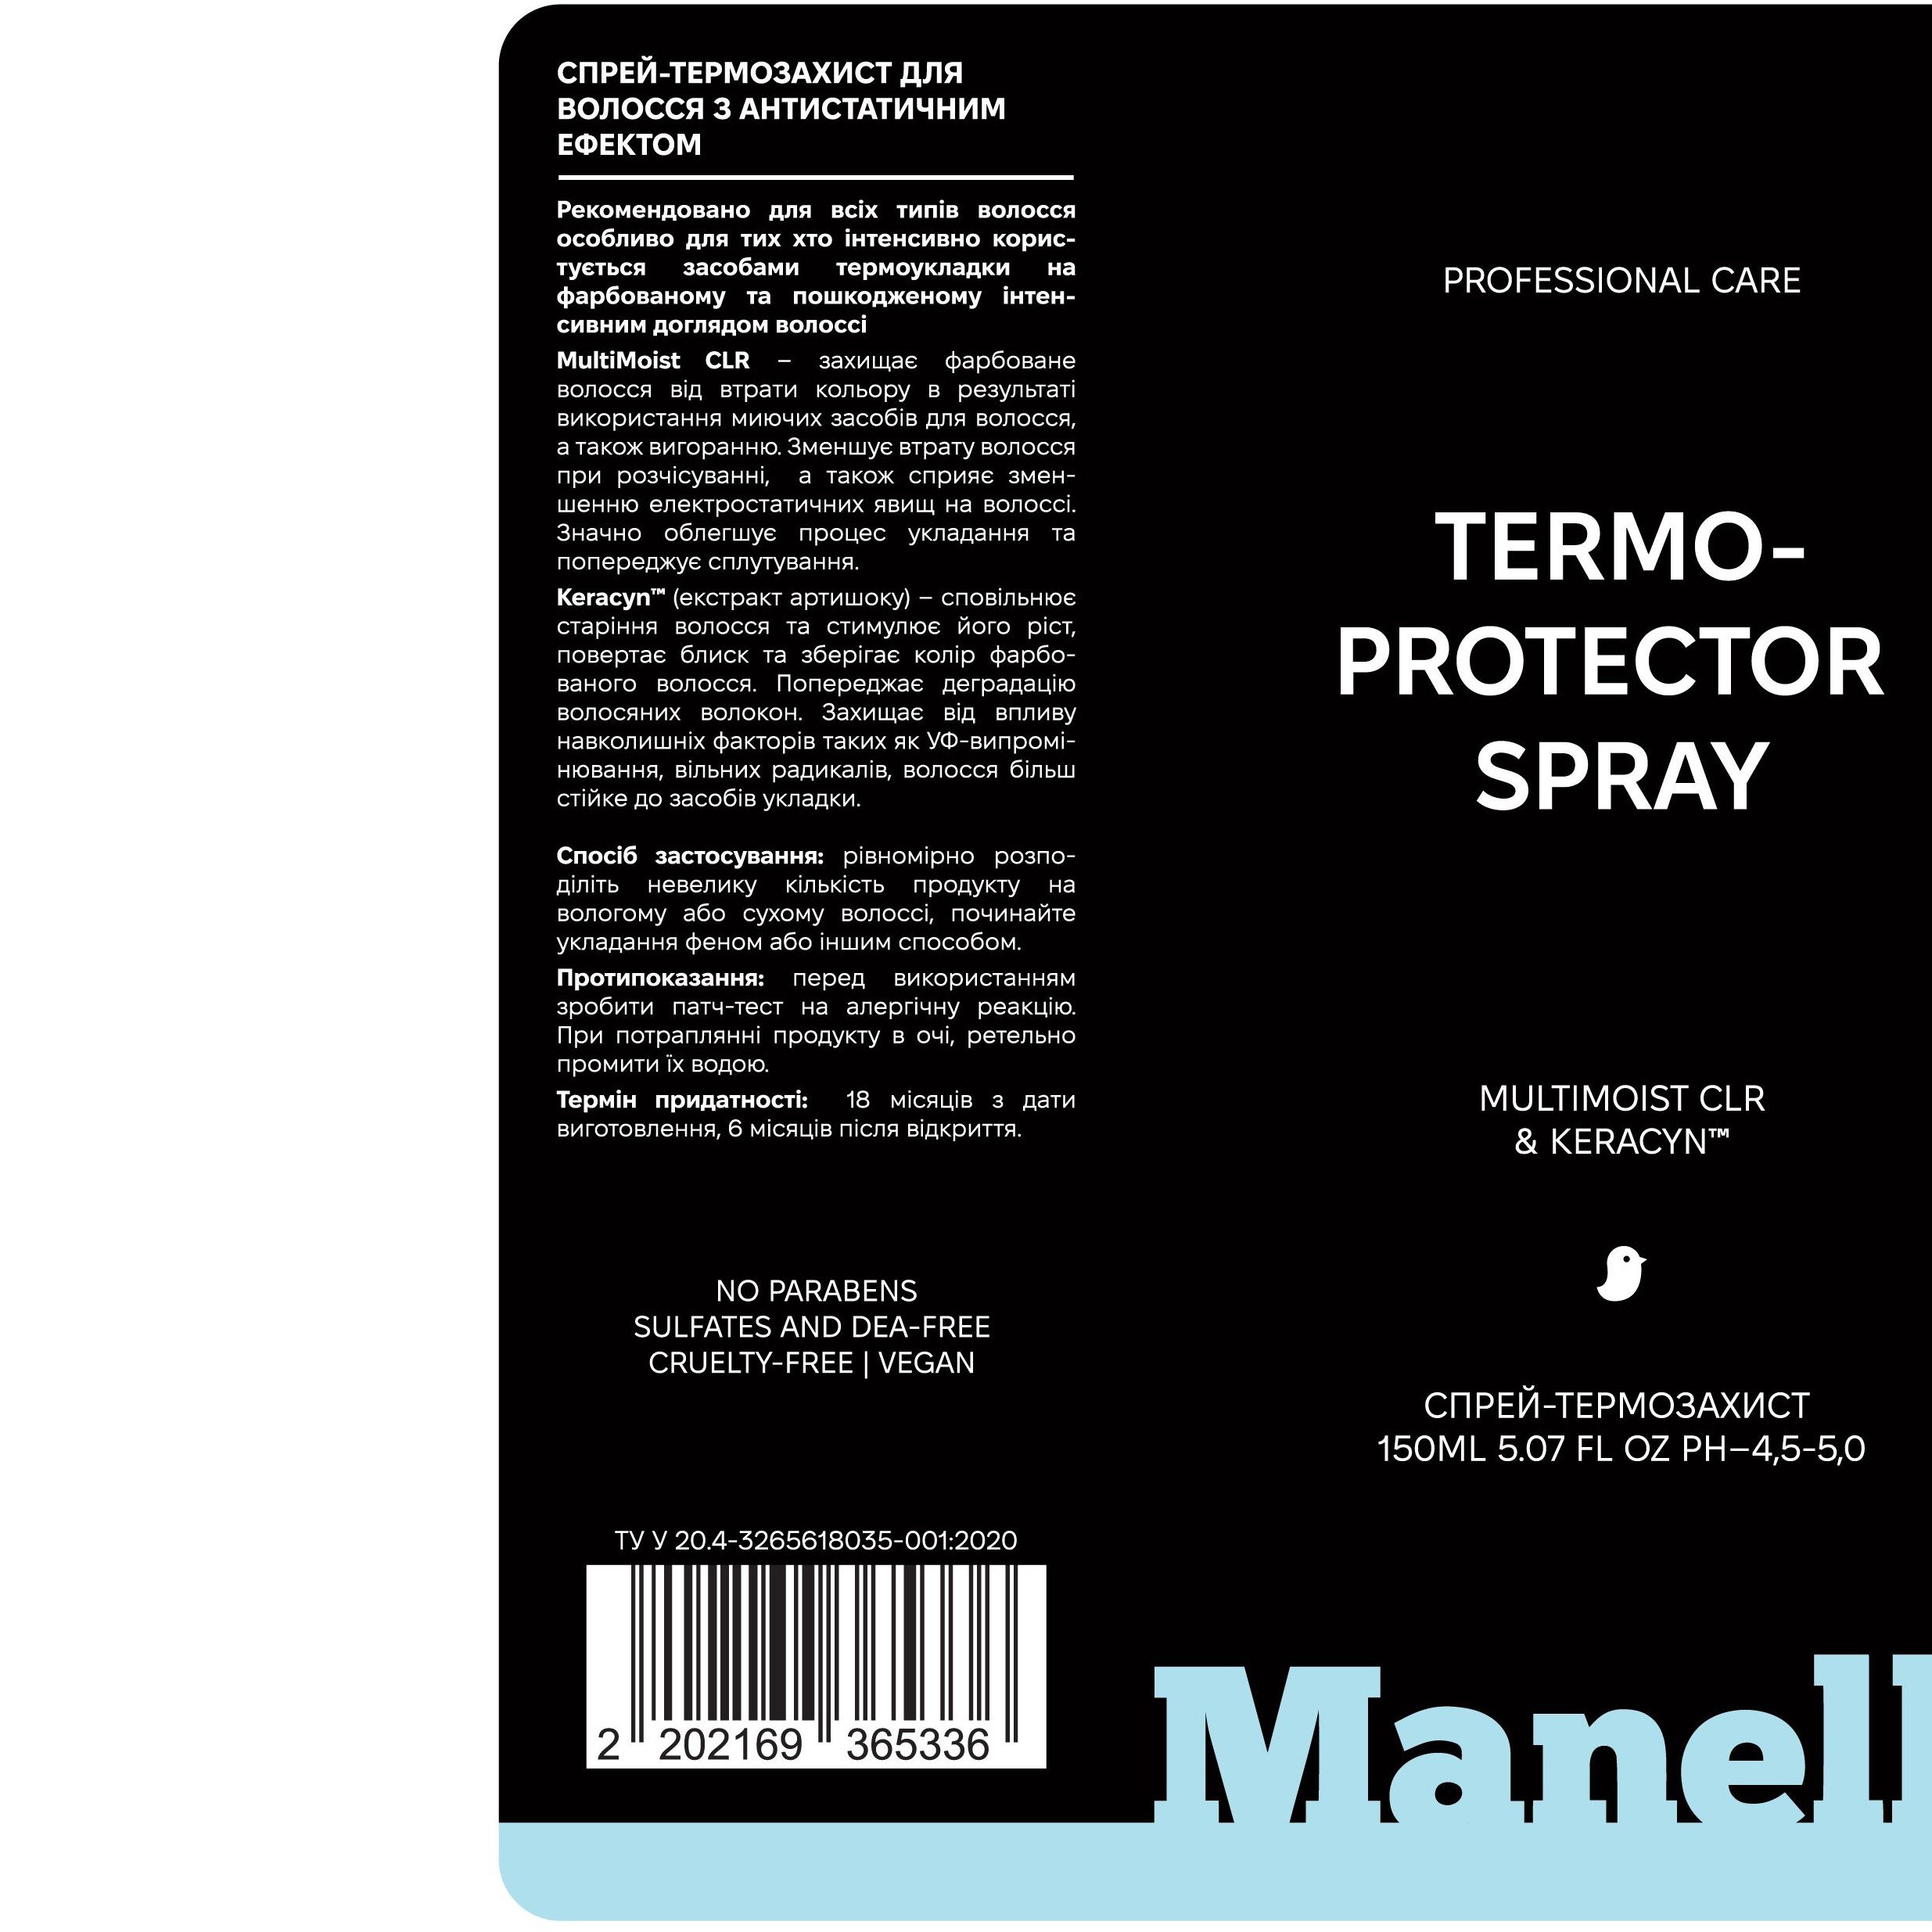 Спрей-термозащита Manelle Professional care MultiMoist CLR & Keracyn 150 мл - фото 3